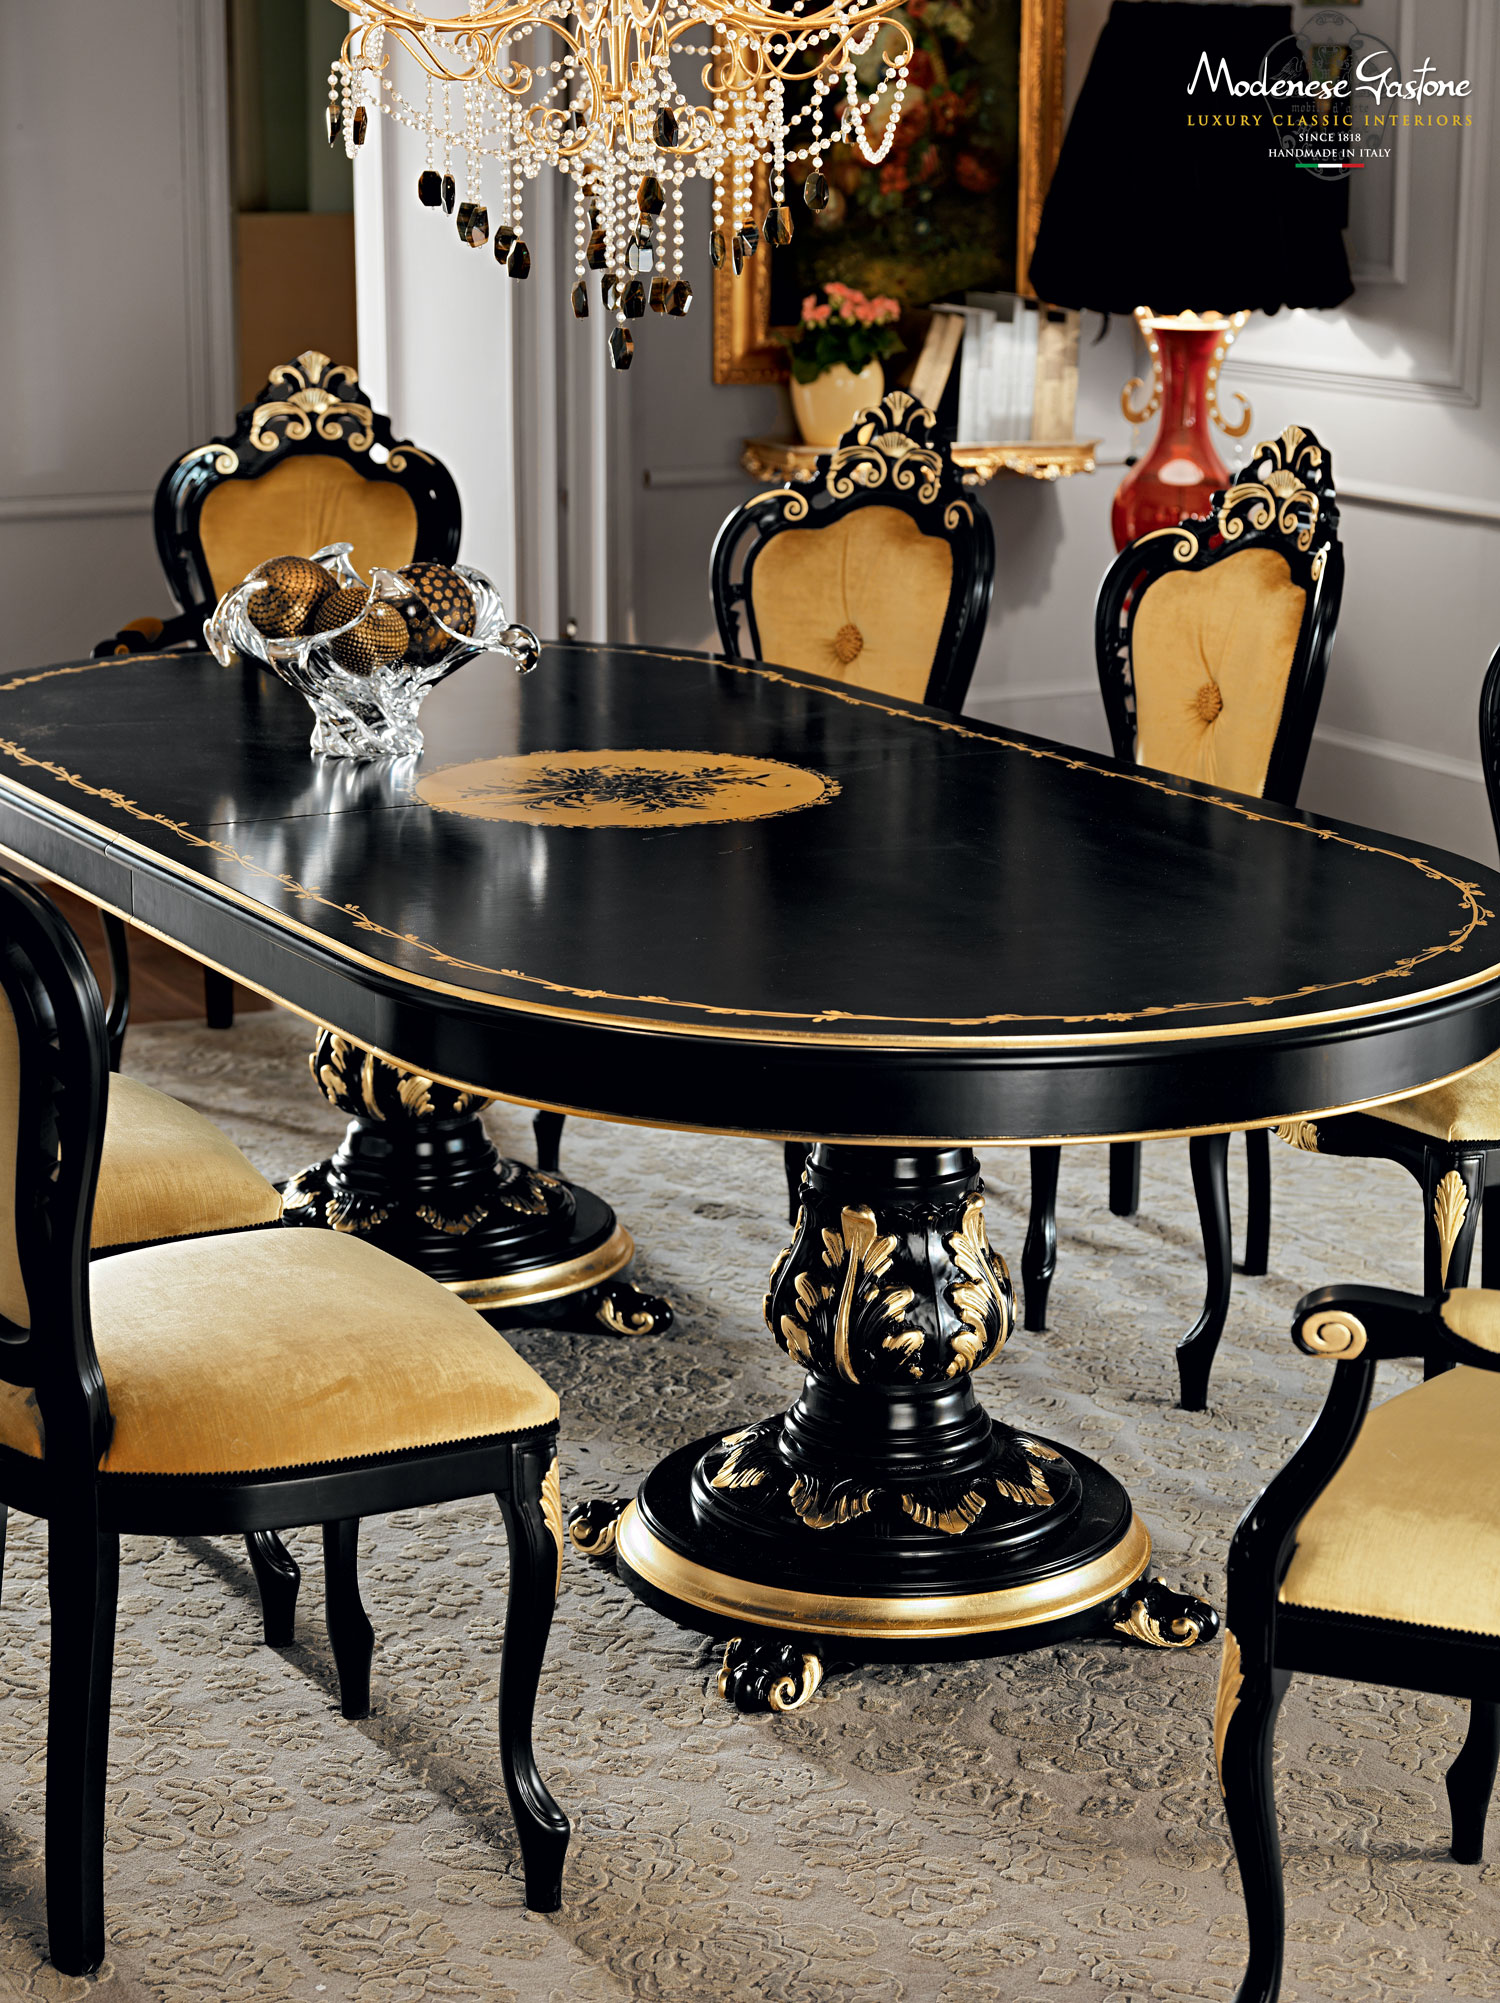 Extendable-black-hardwood-handmade-dining-table-Villa-Venezia-collection-Modenese-Gastone